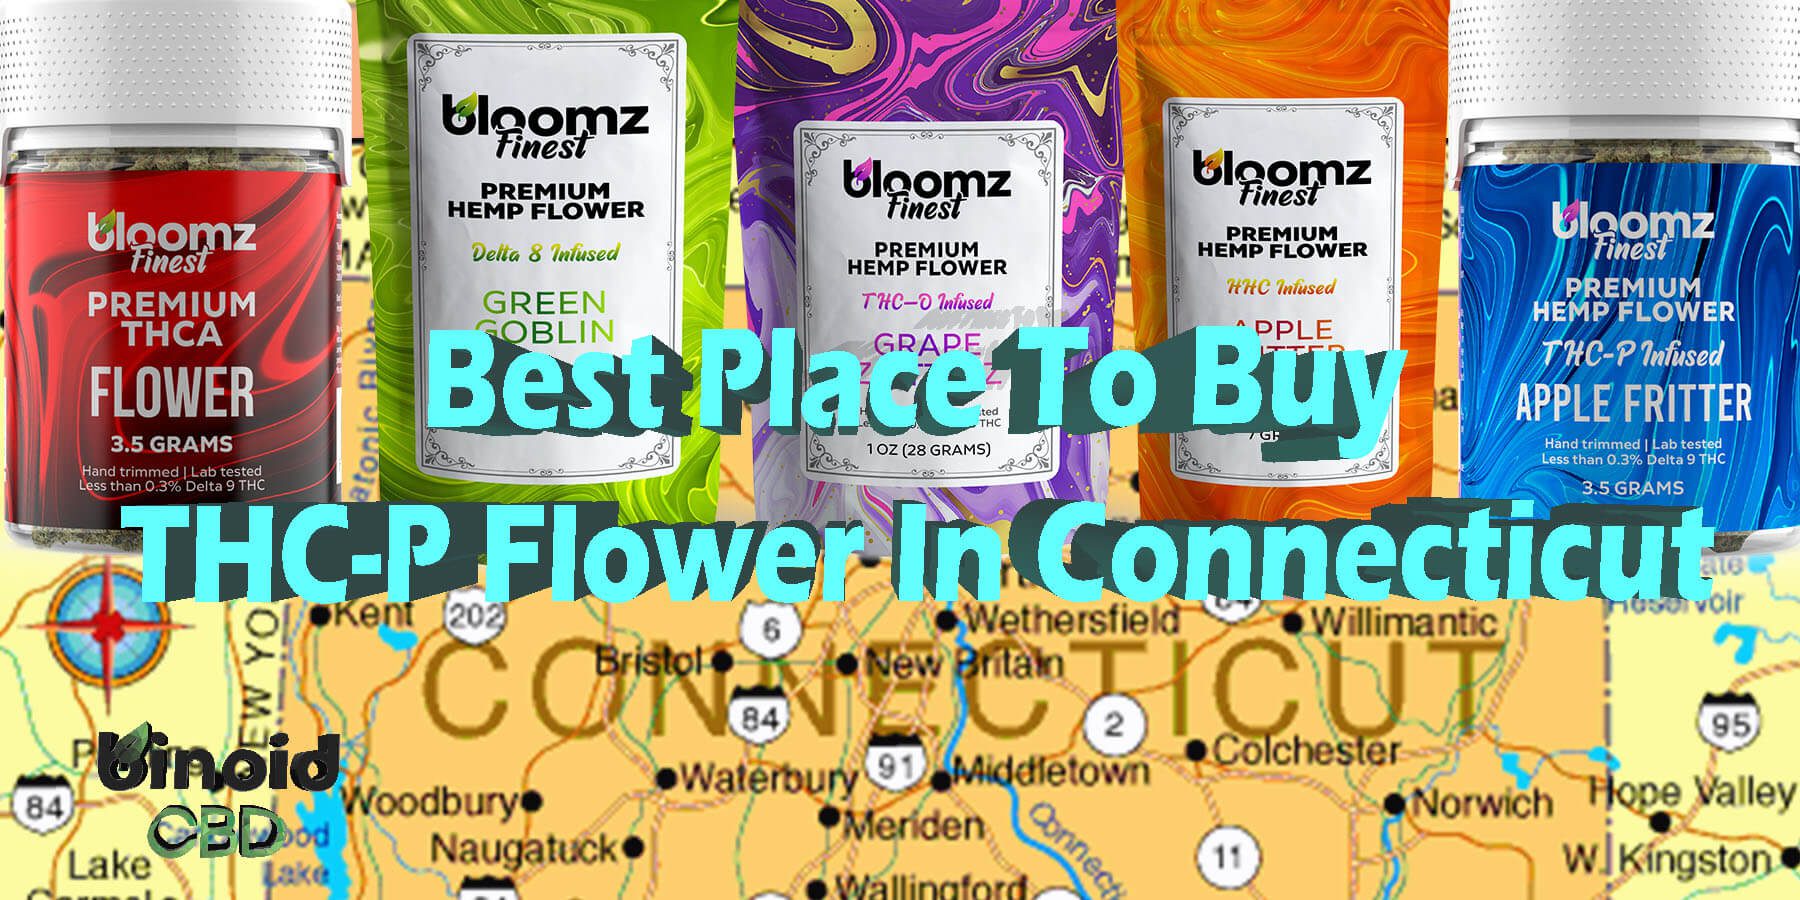 Buy THCP Hemp Flower Connecticut Pre Rolls Get Online Near Me For Sale Best Brand Strongest Real Legal Store Shop Reddit